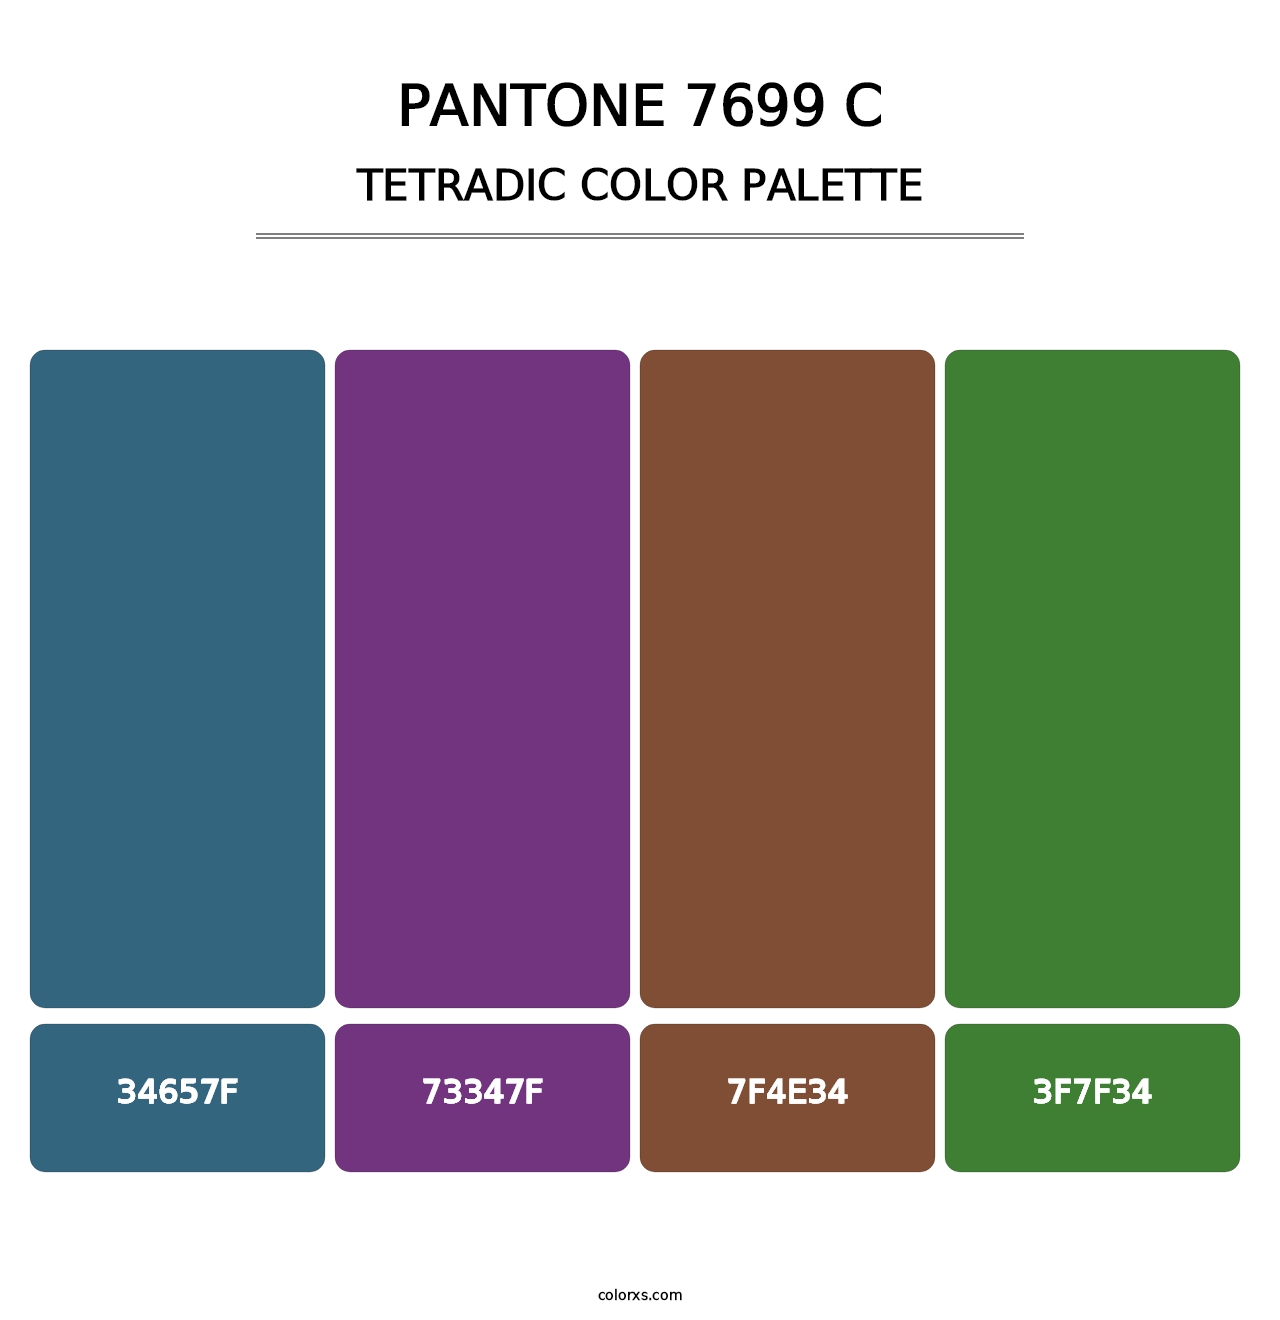 PANTONE 7699 C - Tetradic Color Palette